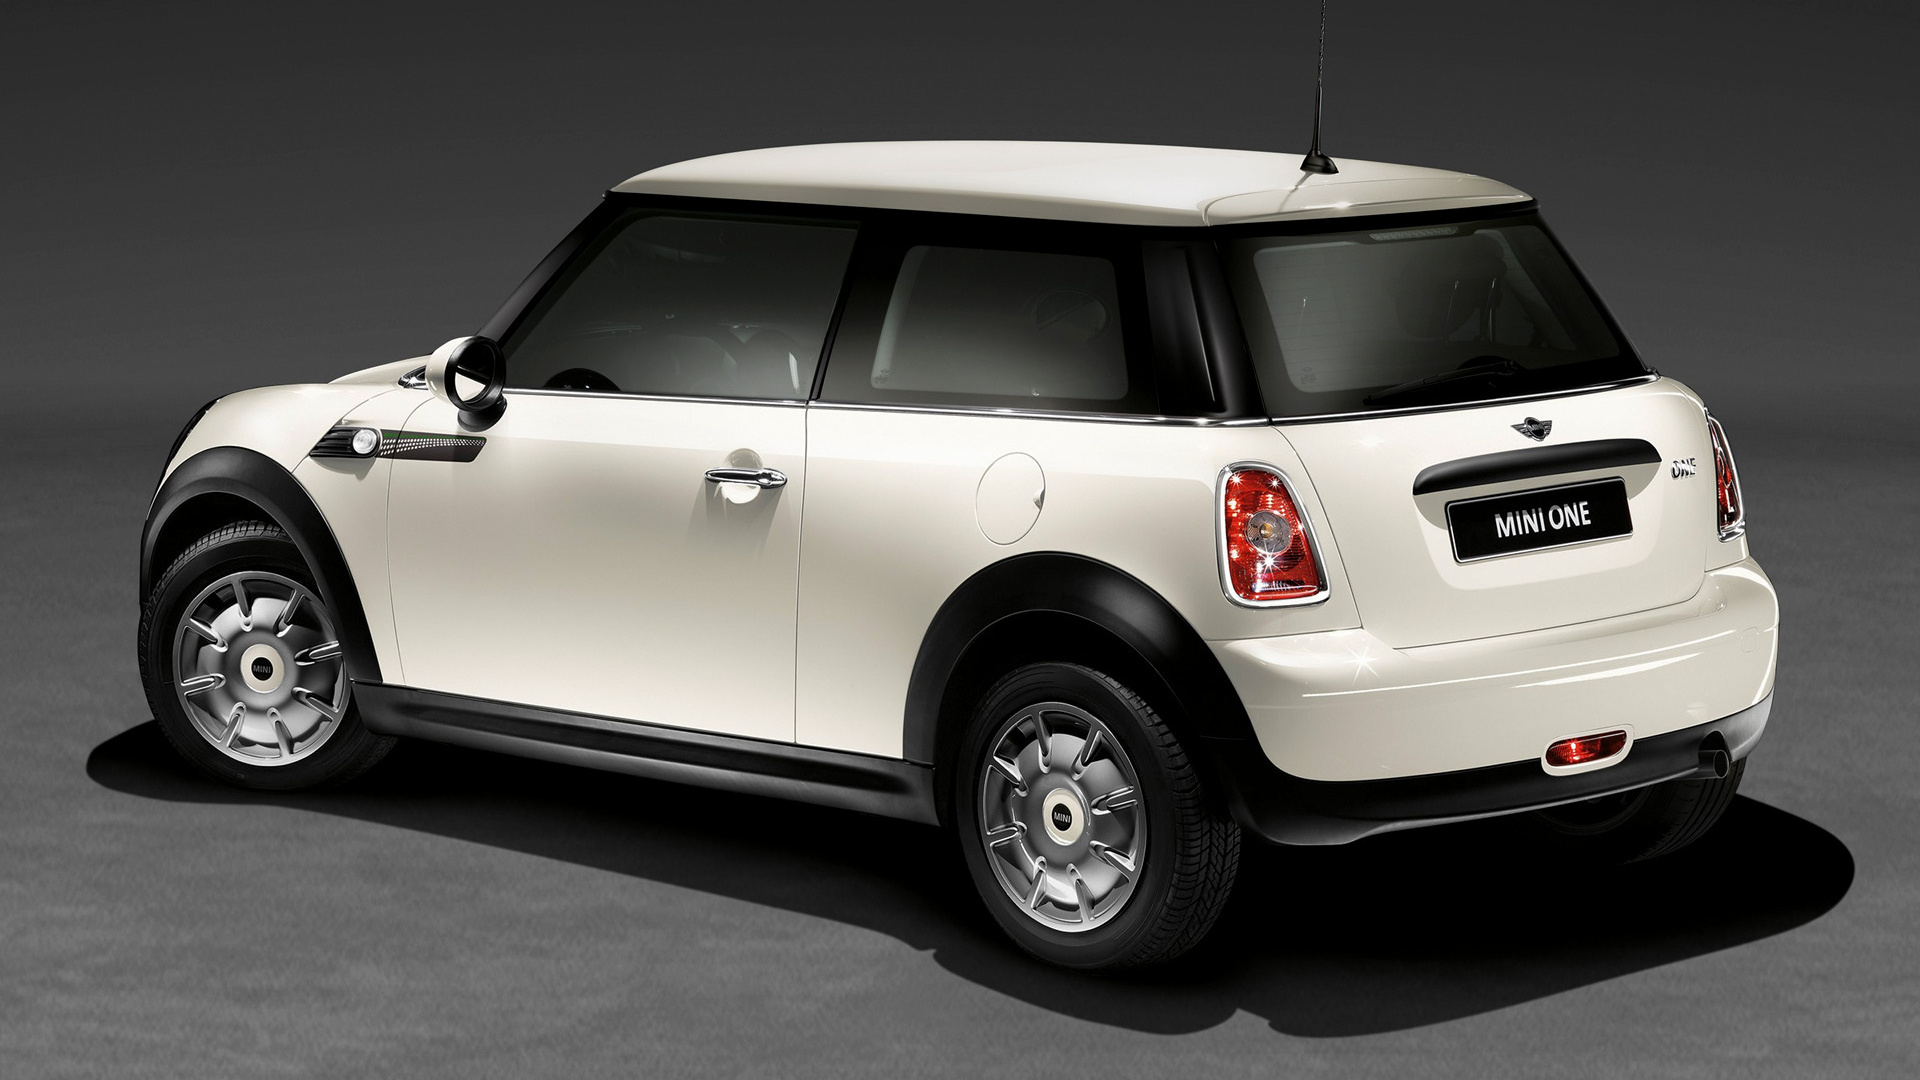 Download mobile wallpaper Car, Mini, Vehicles, White Car, Mini One Minimalism Line for free.